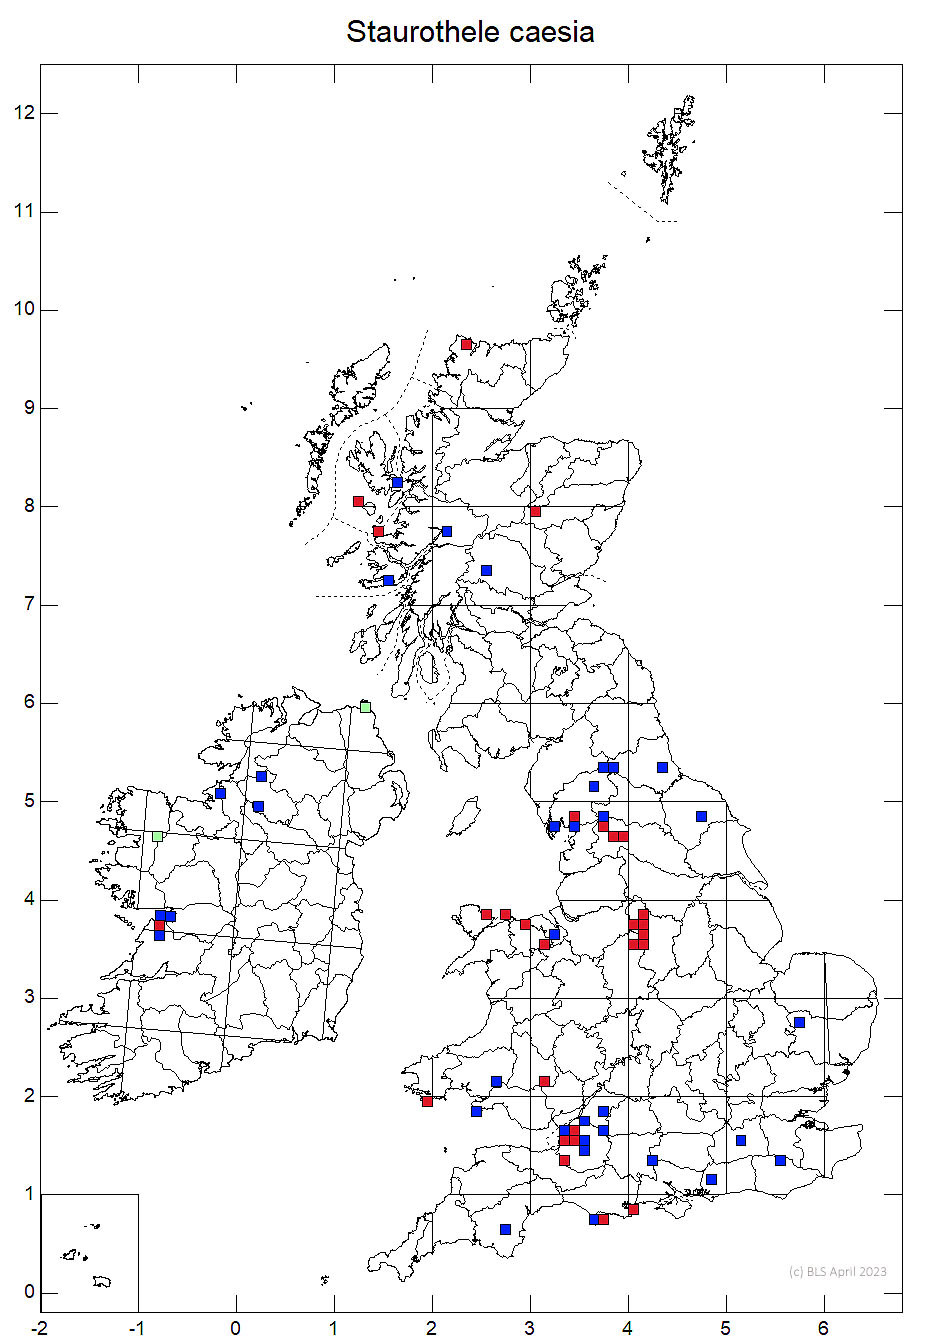 Staurothele caesia 10km sq distribution map